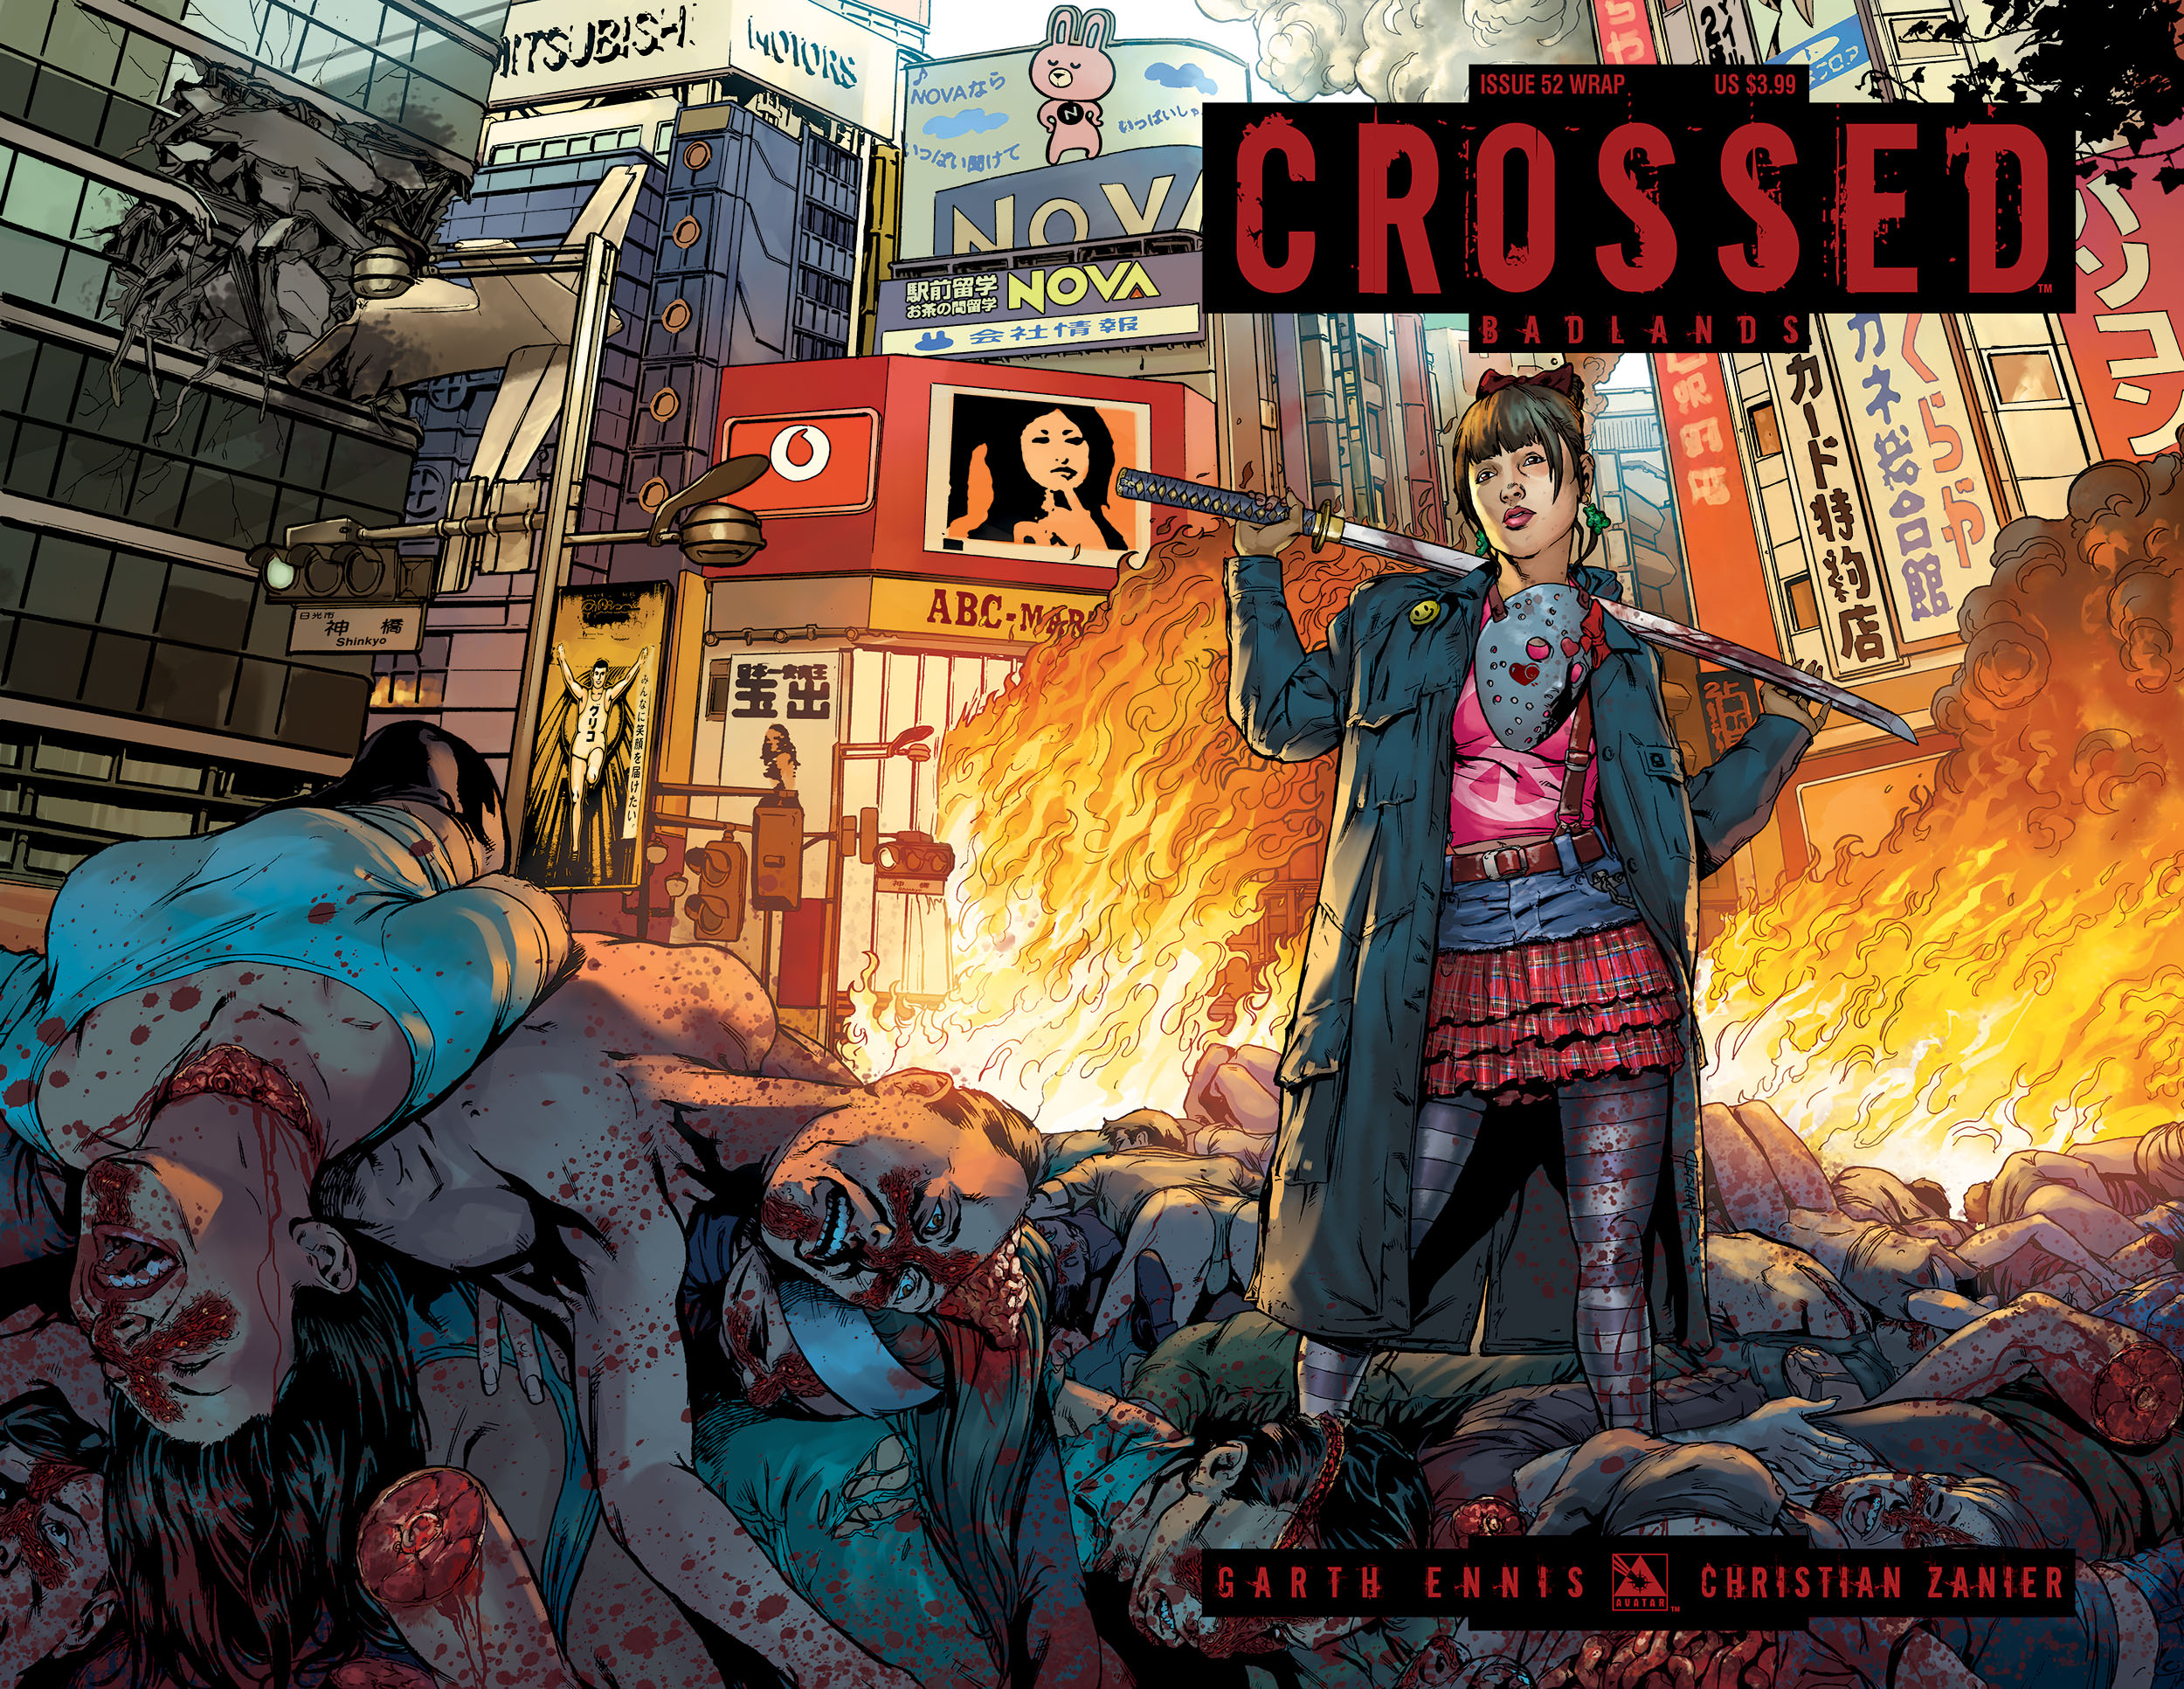 Read online Crossed: Badlands comic -  Issue #52 - 5